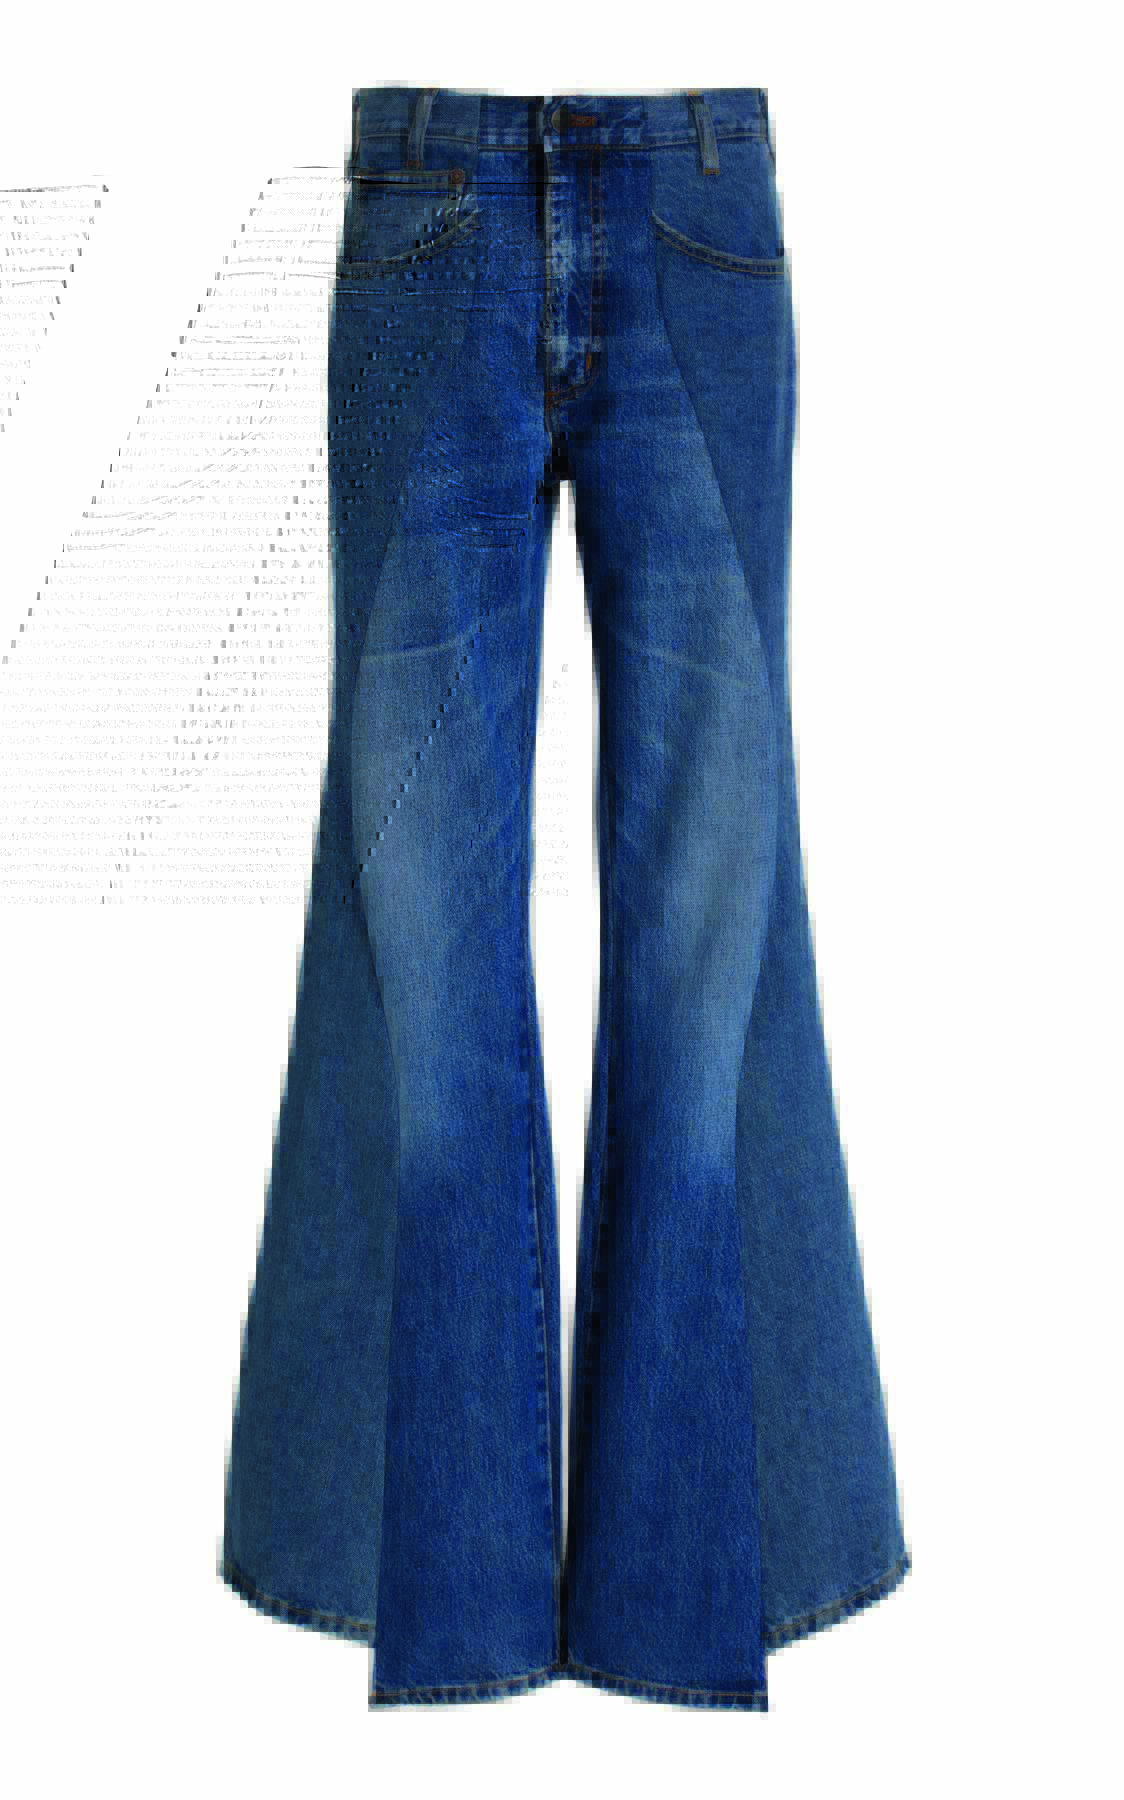 Wide leg blue jeans